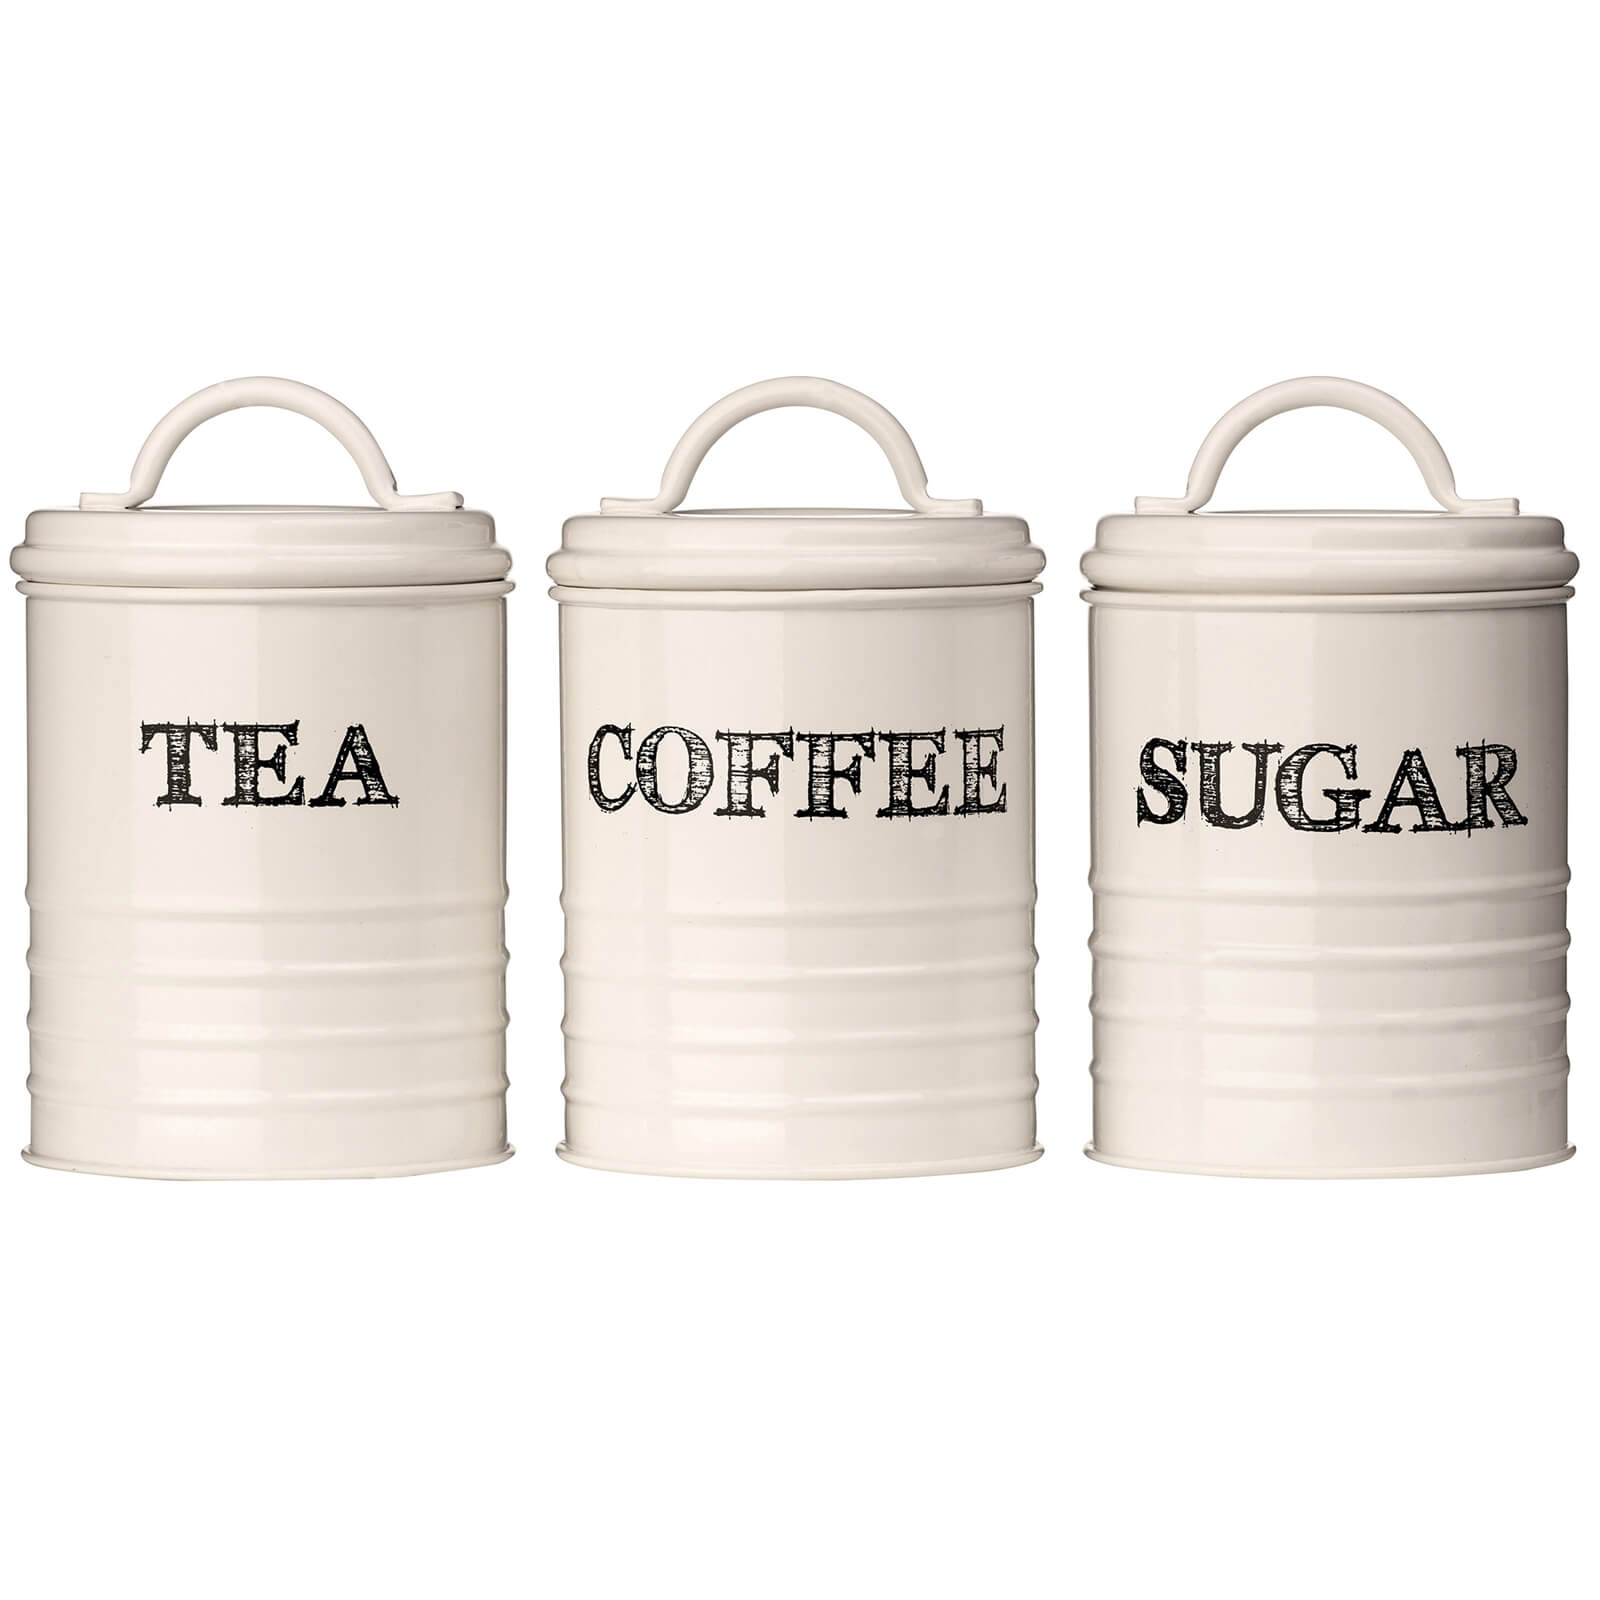 Sketch Tea, Coffee & Sugar Canisters